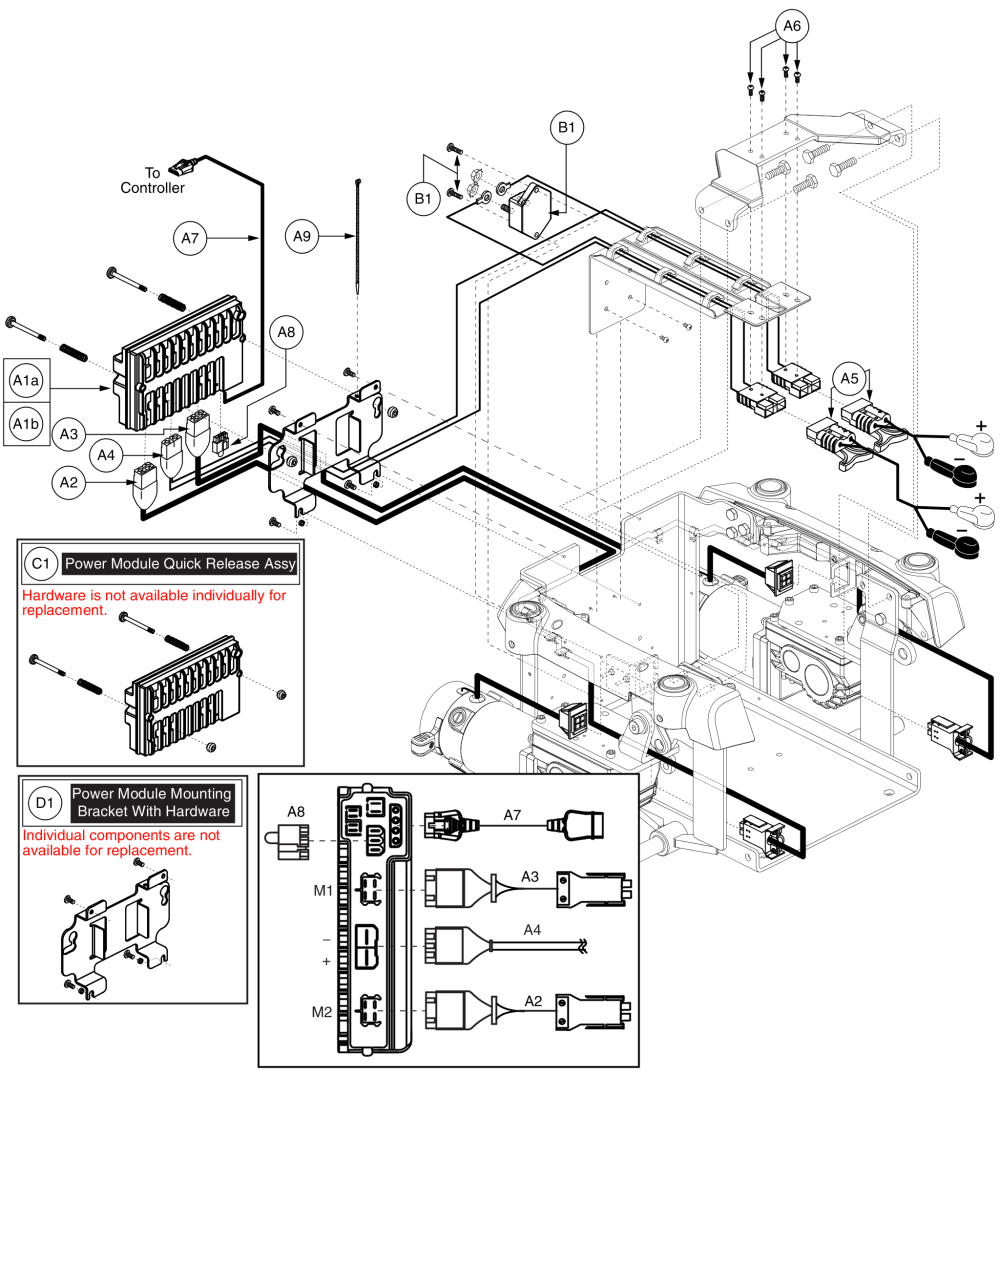 Vr2 Electronics, H2 Motor, Non-power Positioning, Q6000z parts diagram